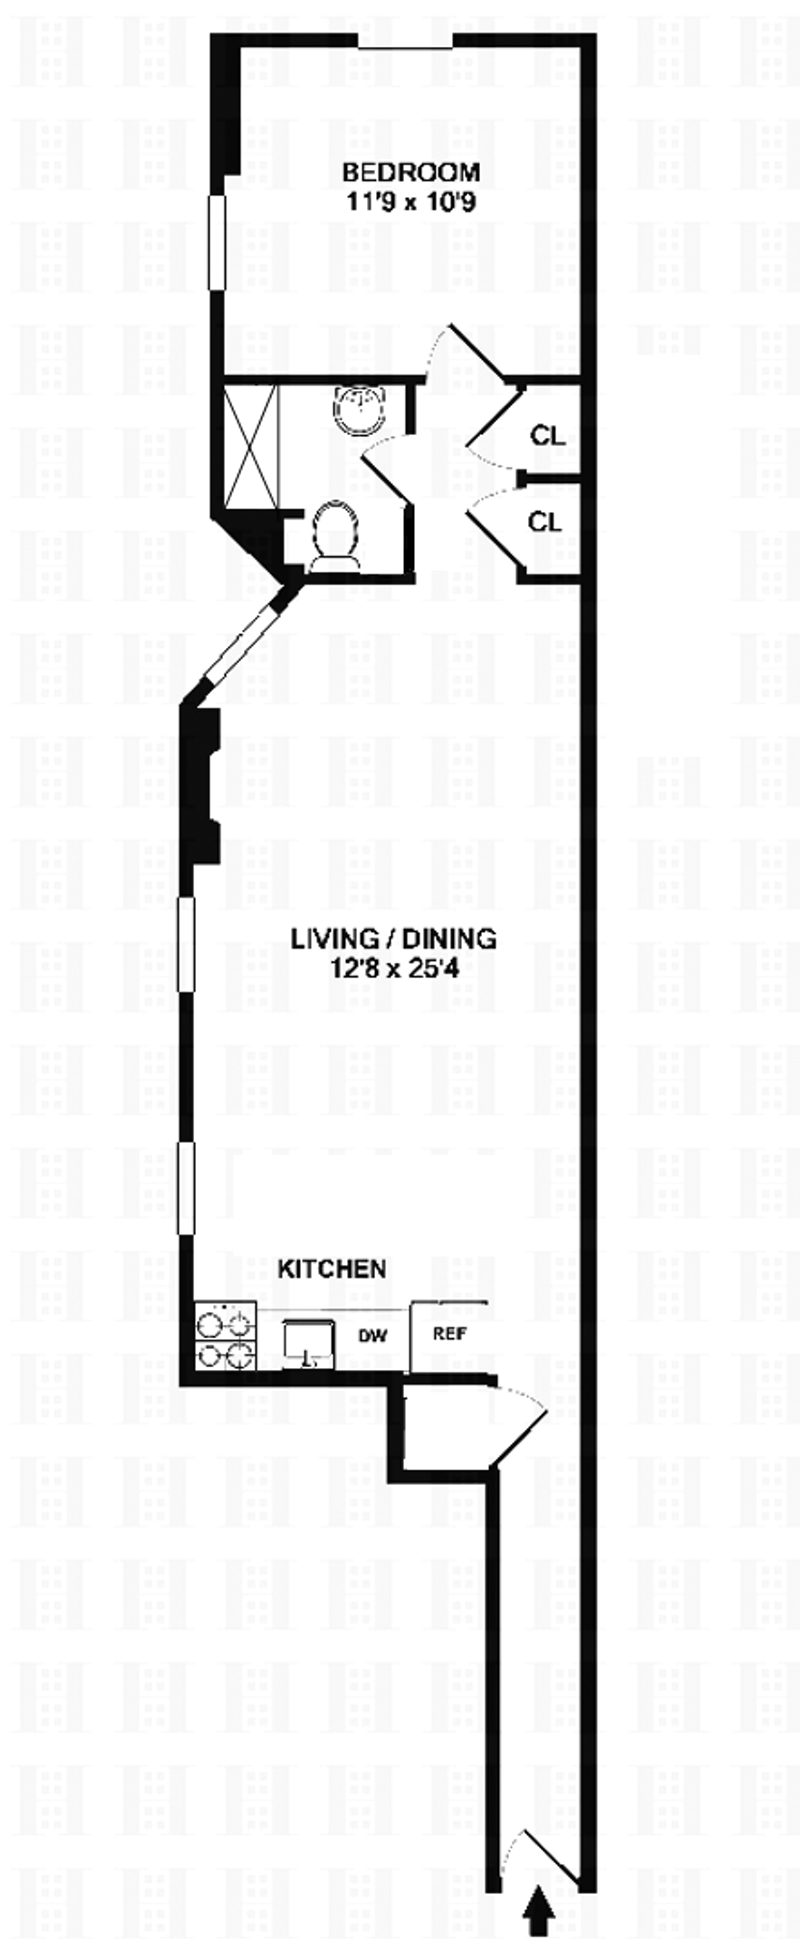 Floorplan for 153 West 80th Street, 2B